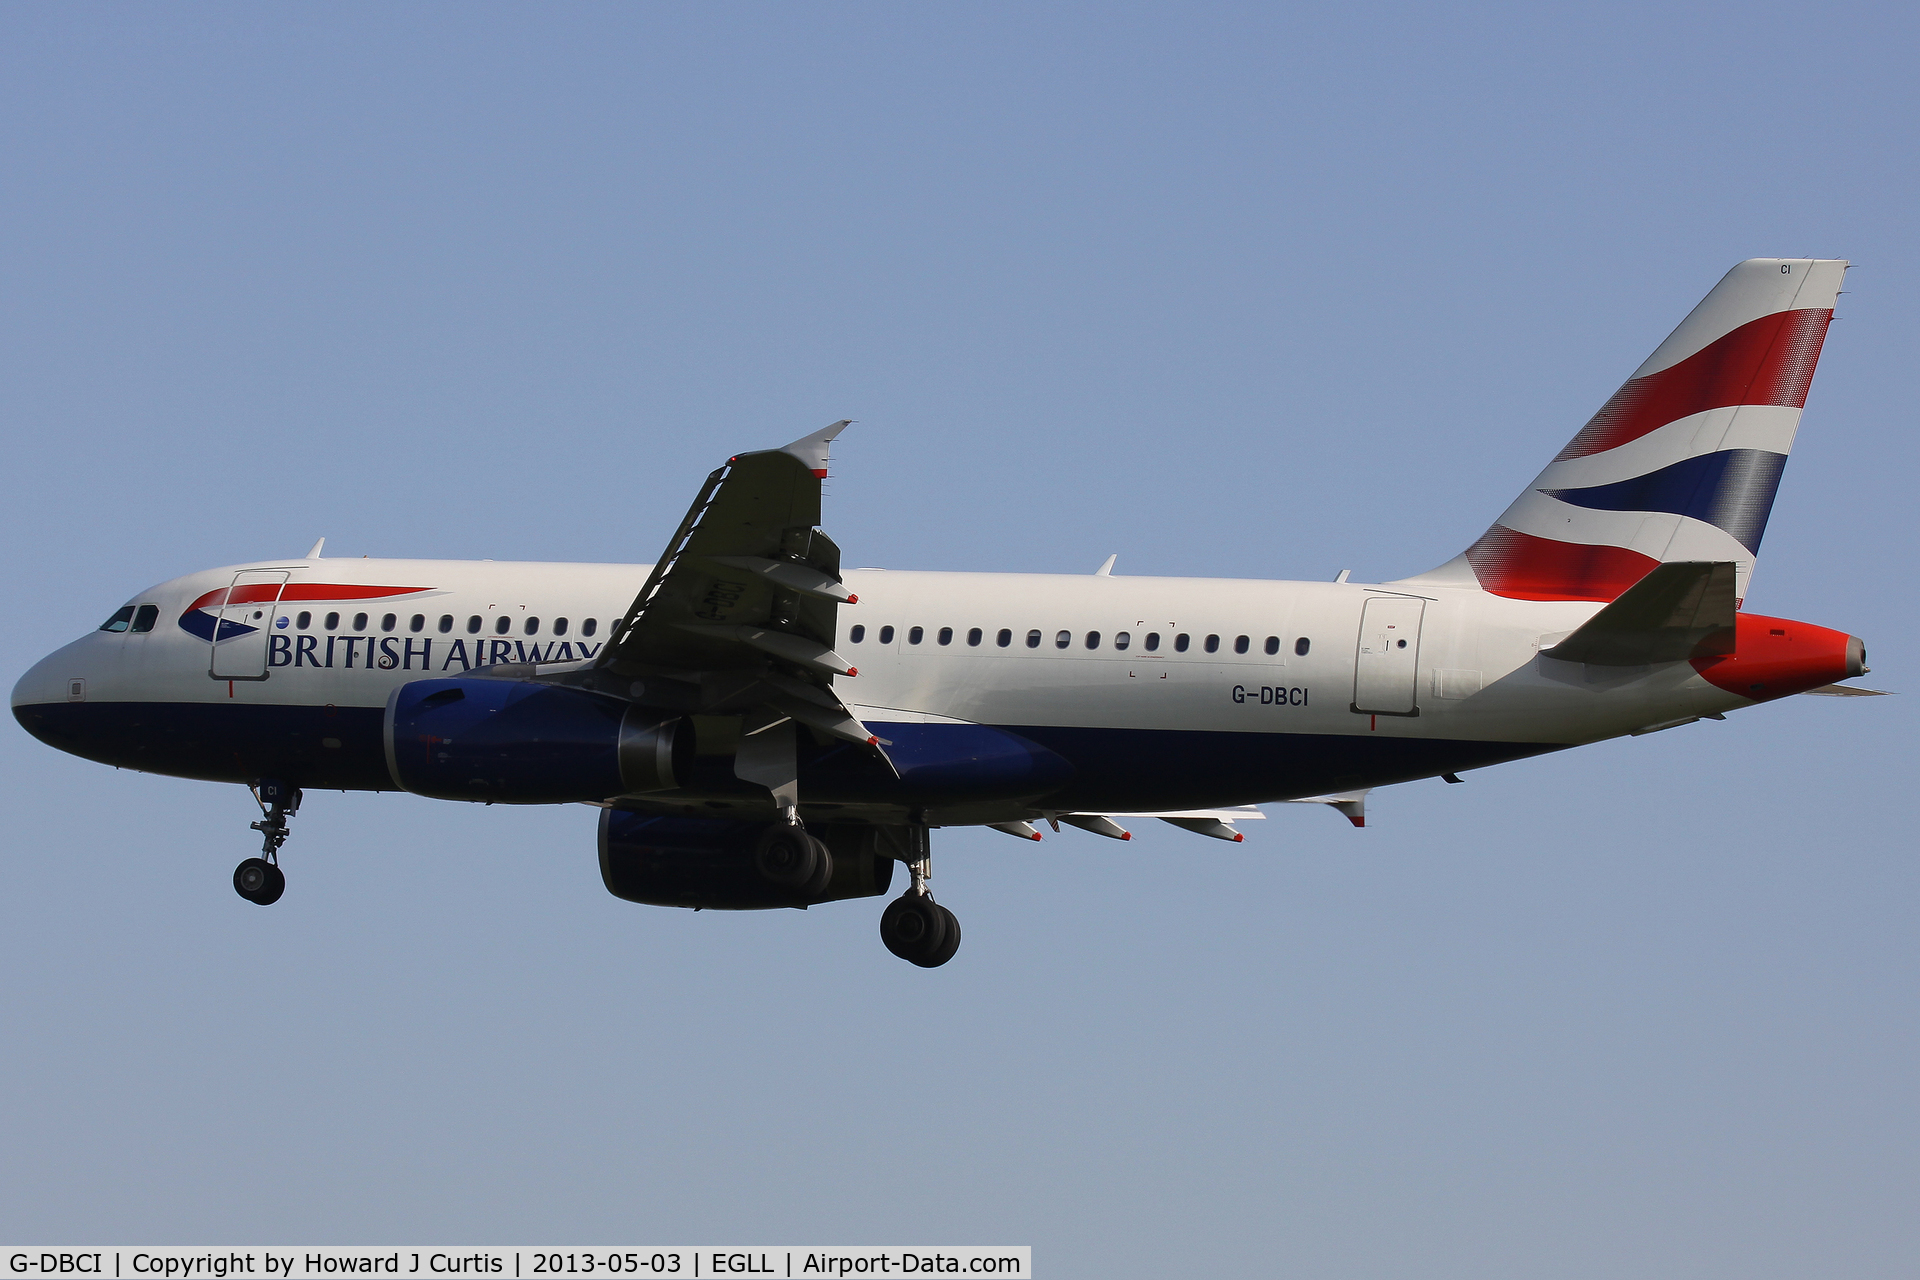 G-DBCI, 2006 Airbus A319-131 C/N 2720, British Airways, on approach to runway 27L.